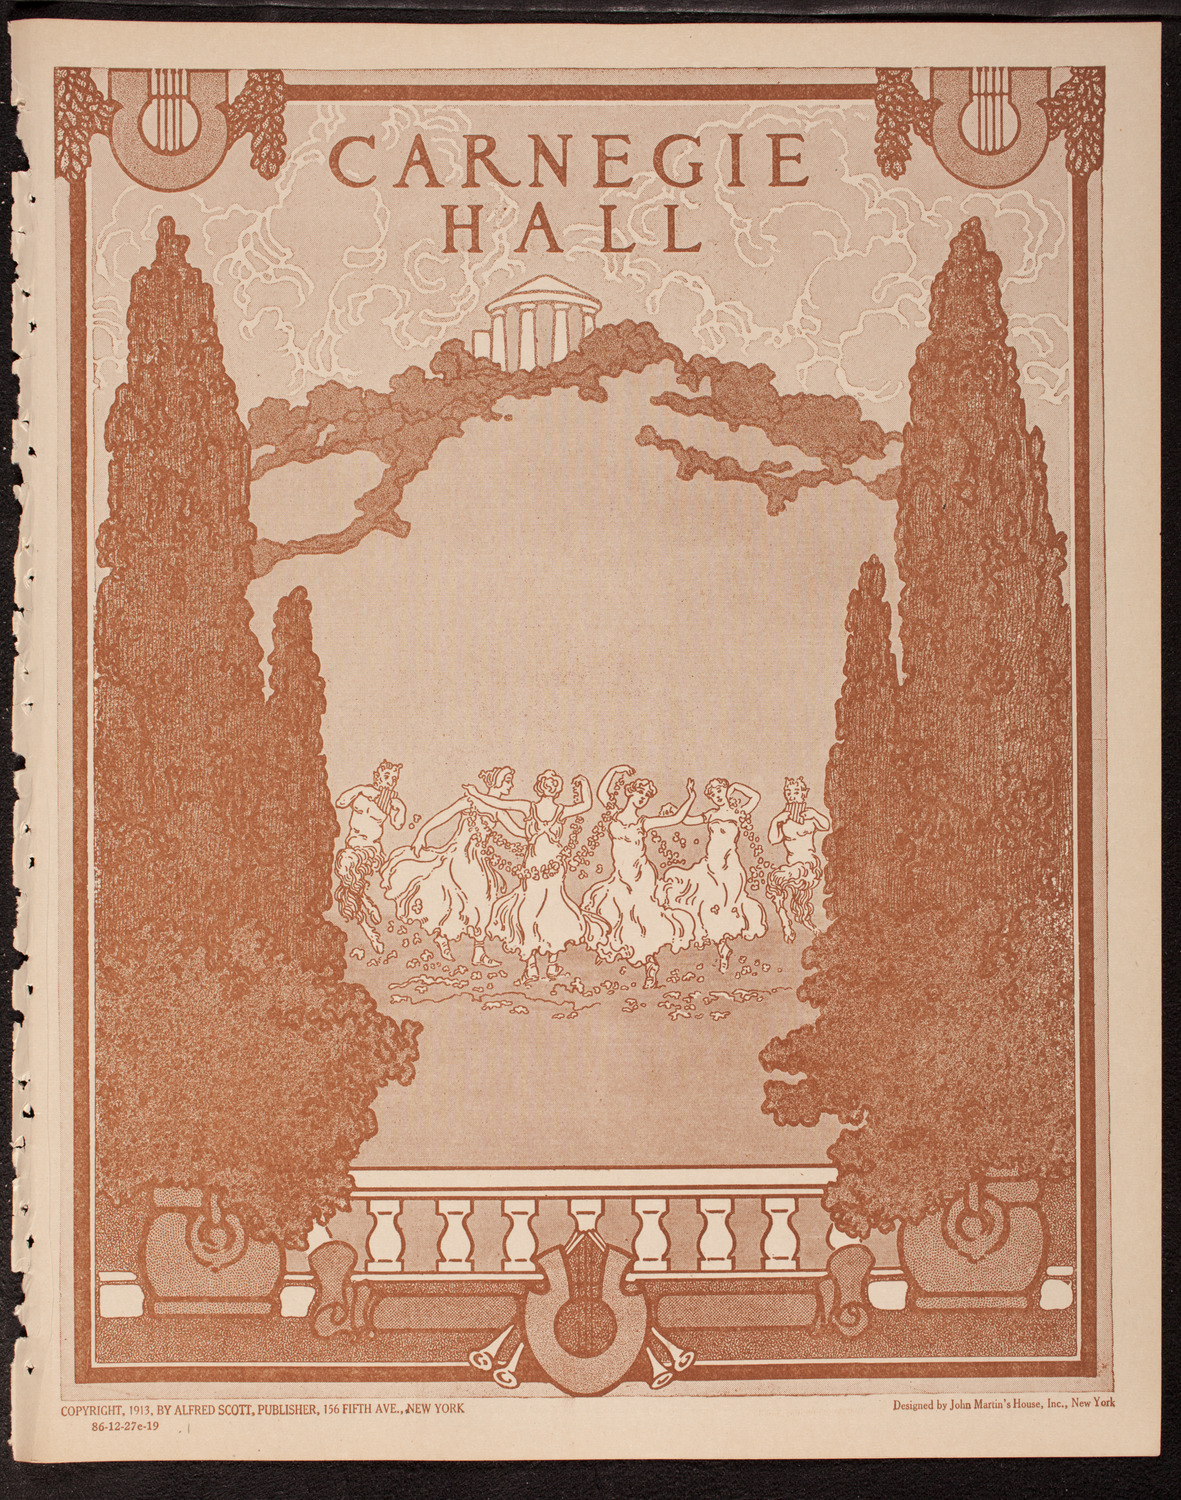 Kanellos Ballet Hellenique, December 27, 1919, program page 1